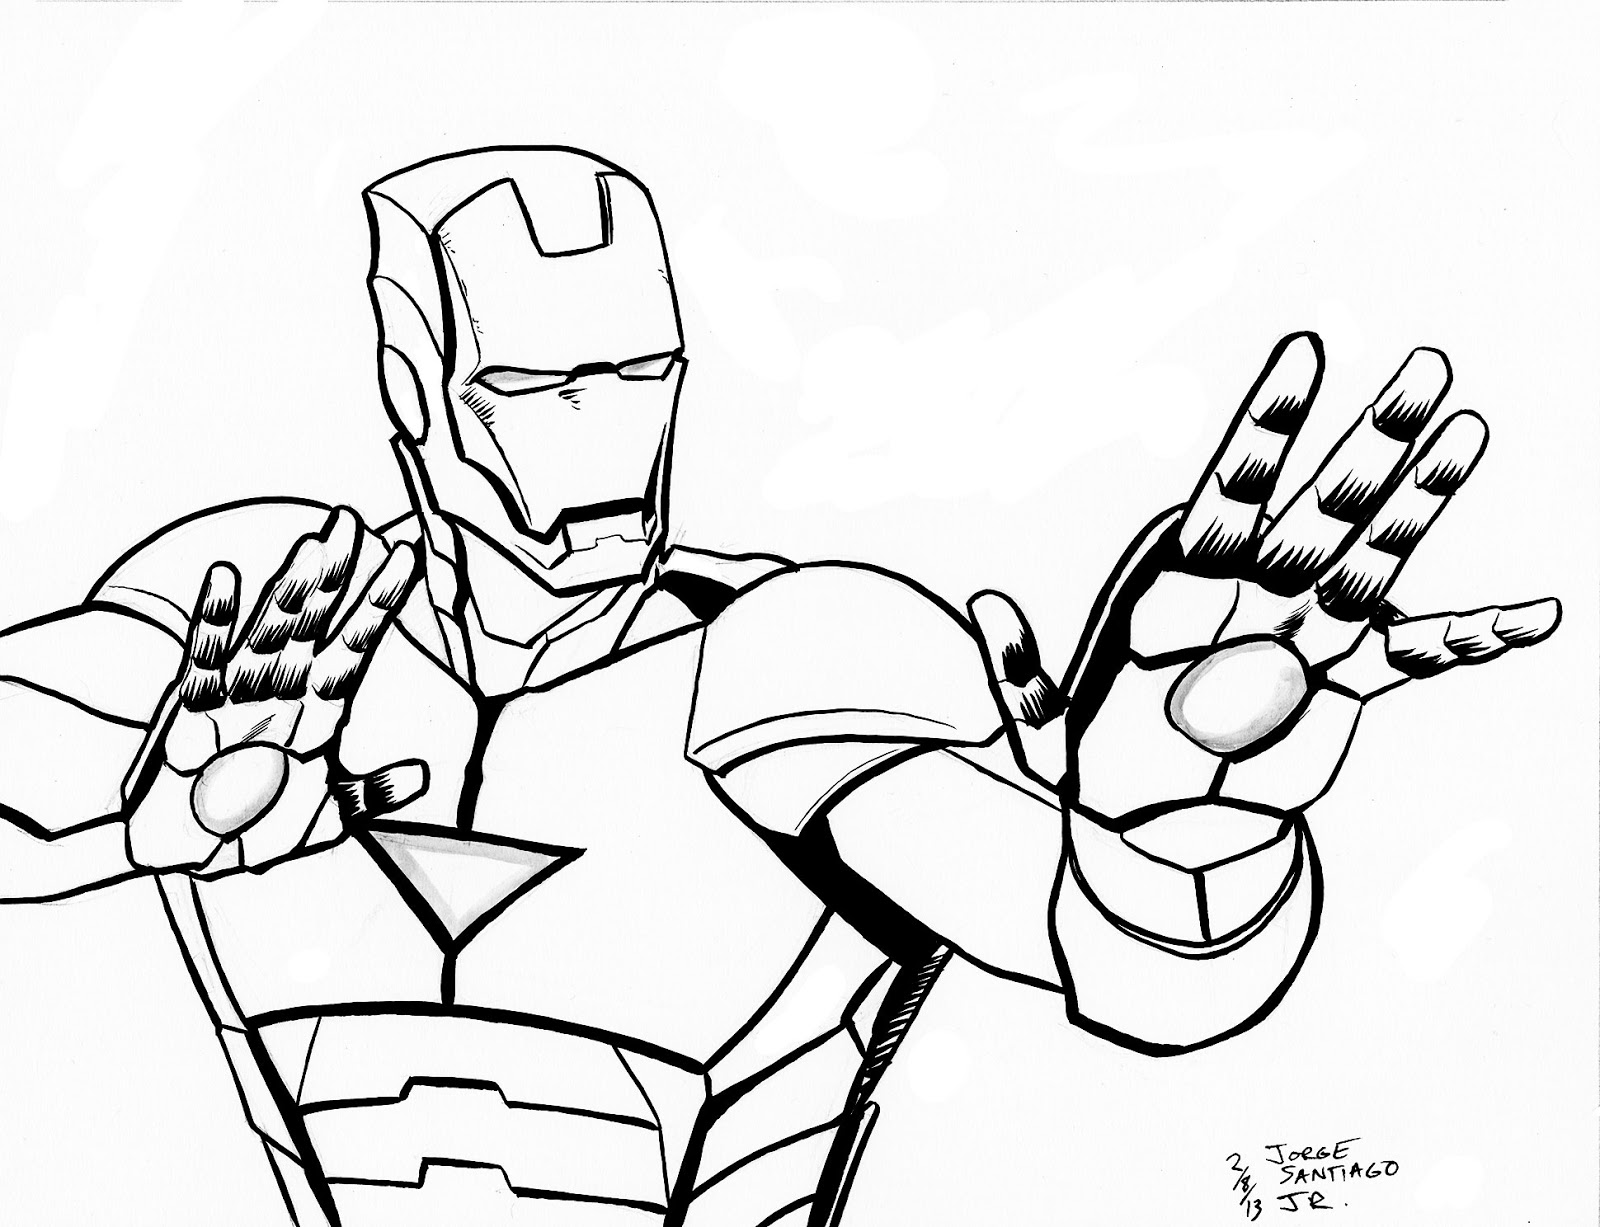 Iron Man timed sketch challenge